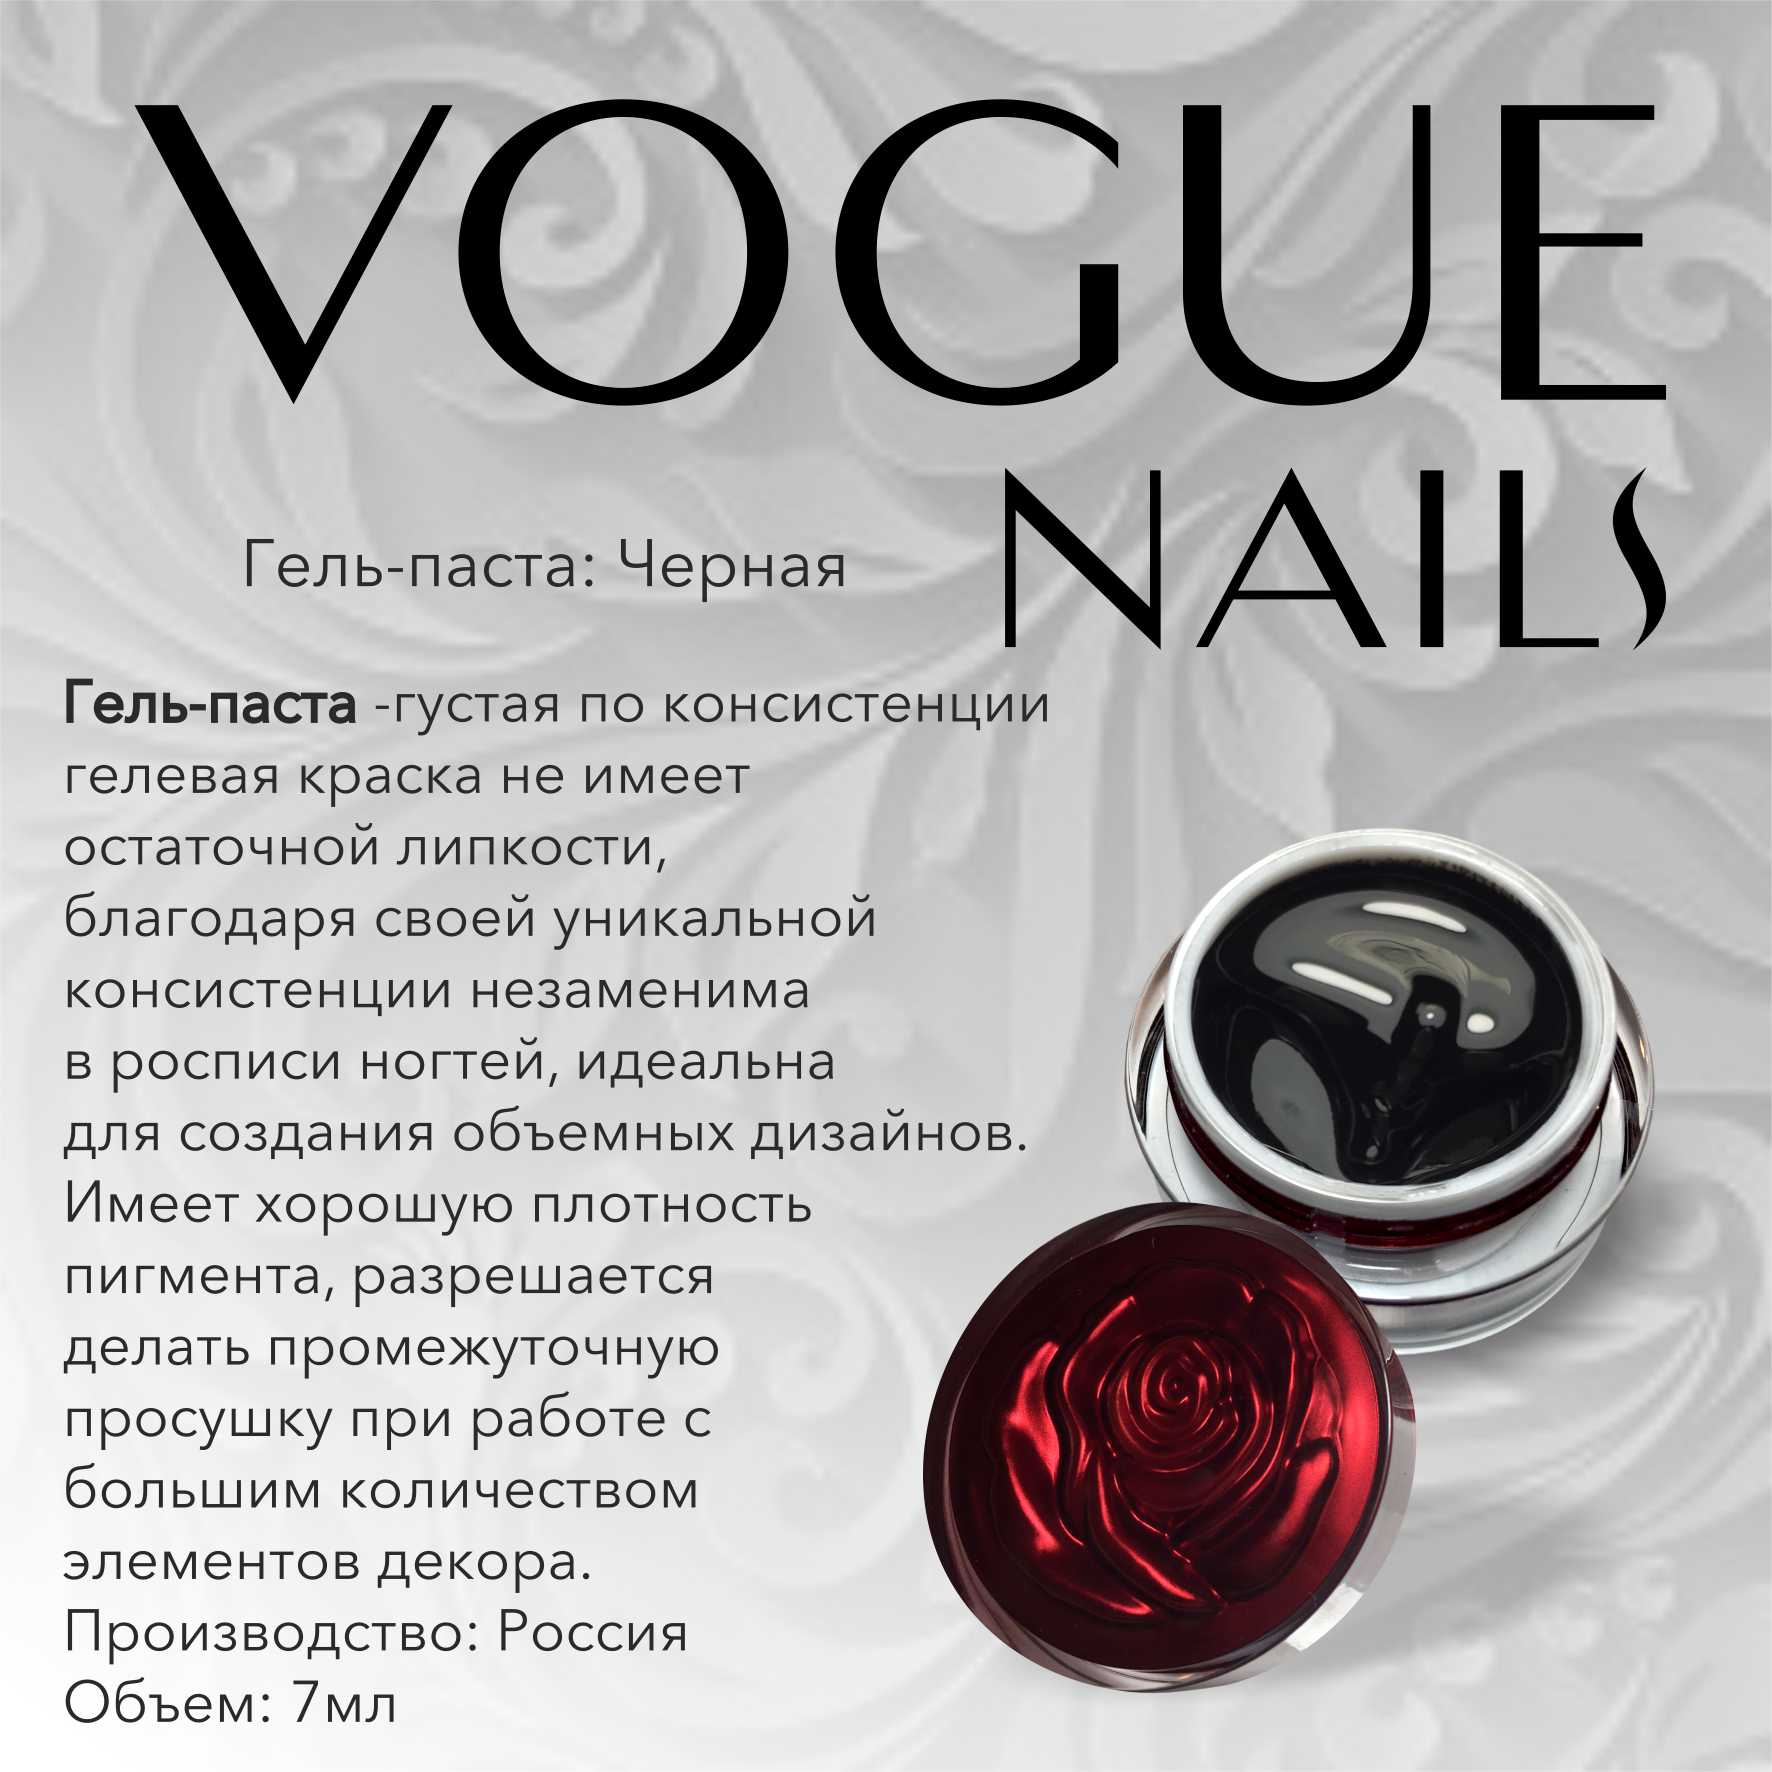 Vogue Nails Гель-паста, Черная, 7гр